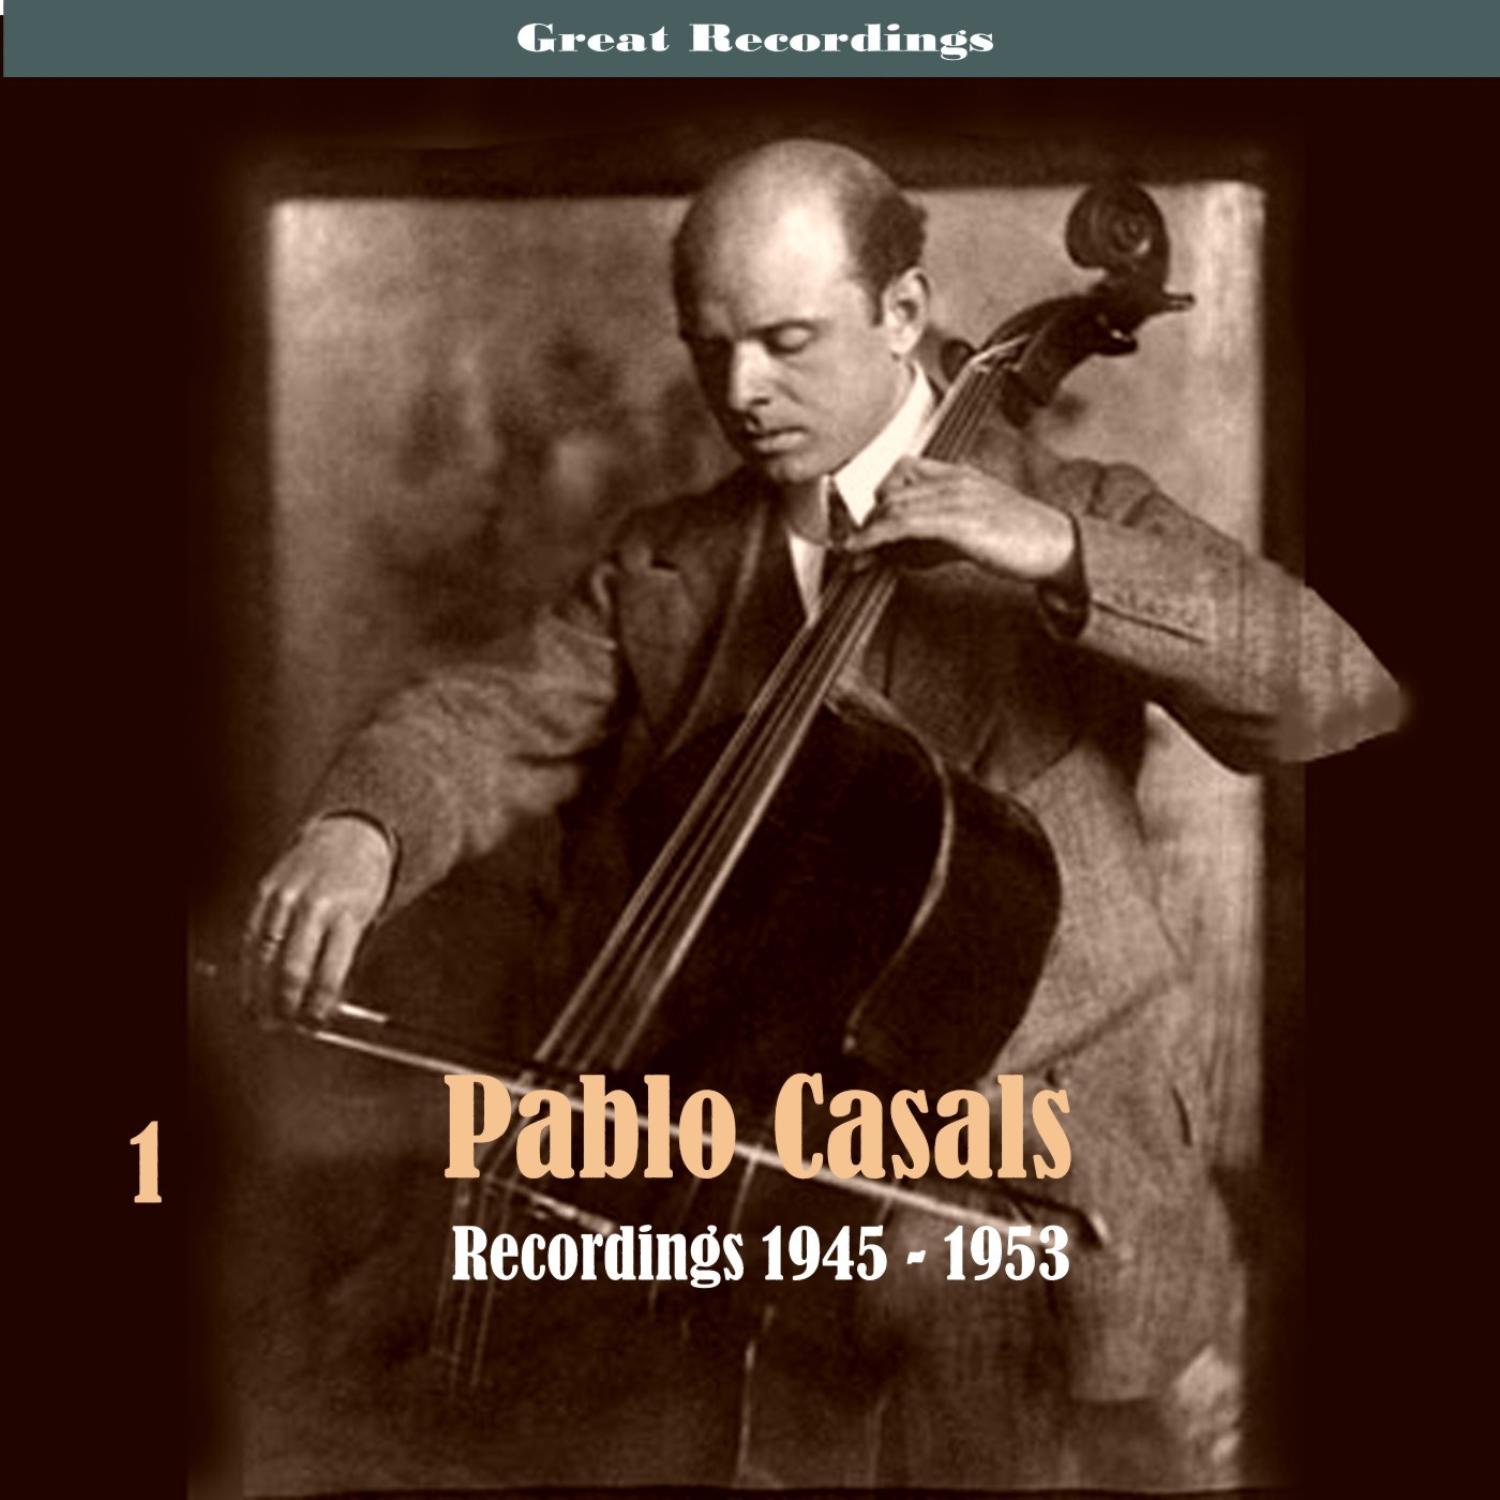 Pablo Casals, Volume 1 - Recordings 1945 - 1953